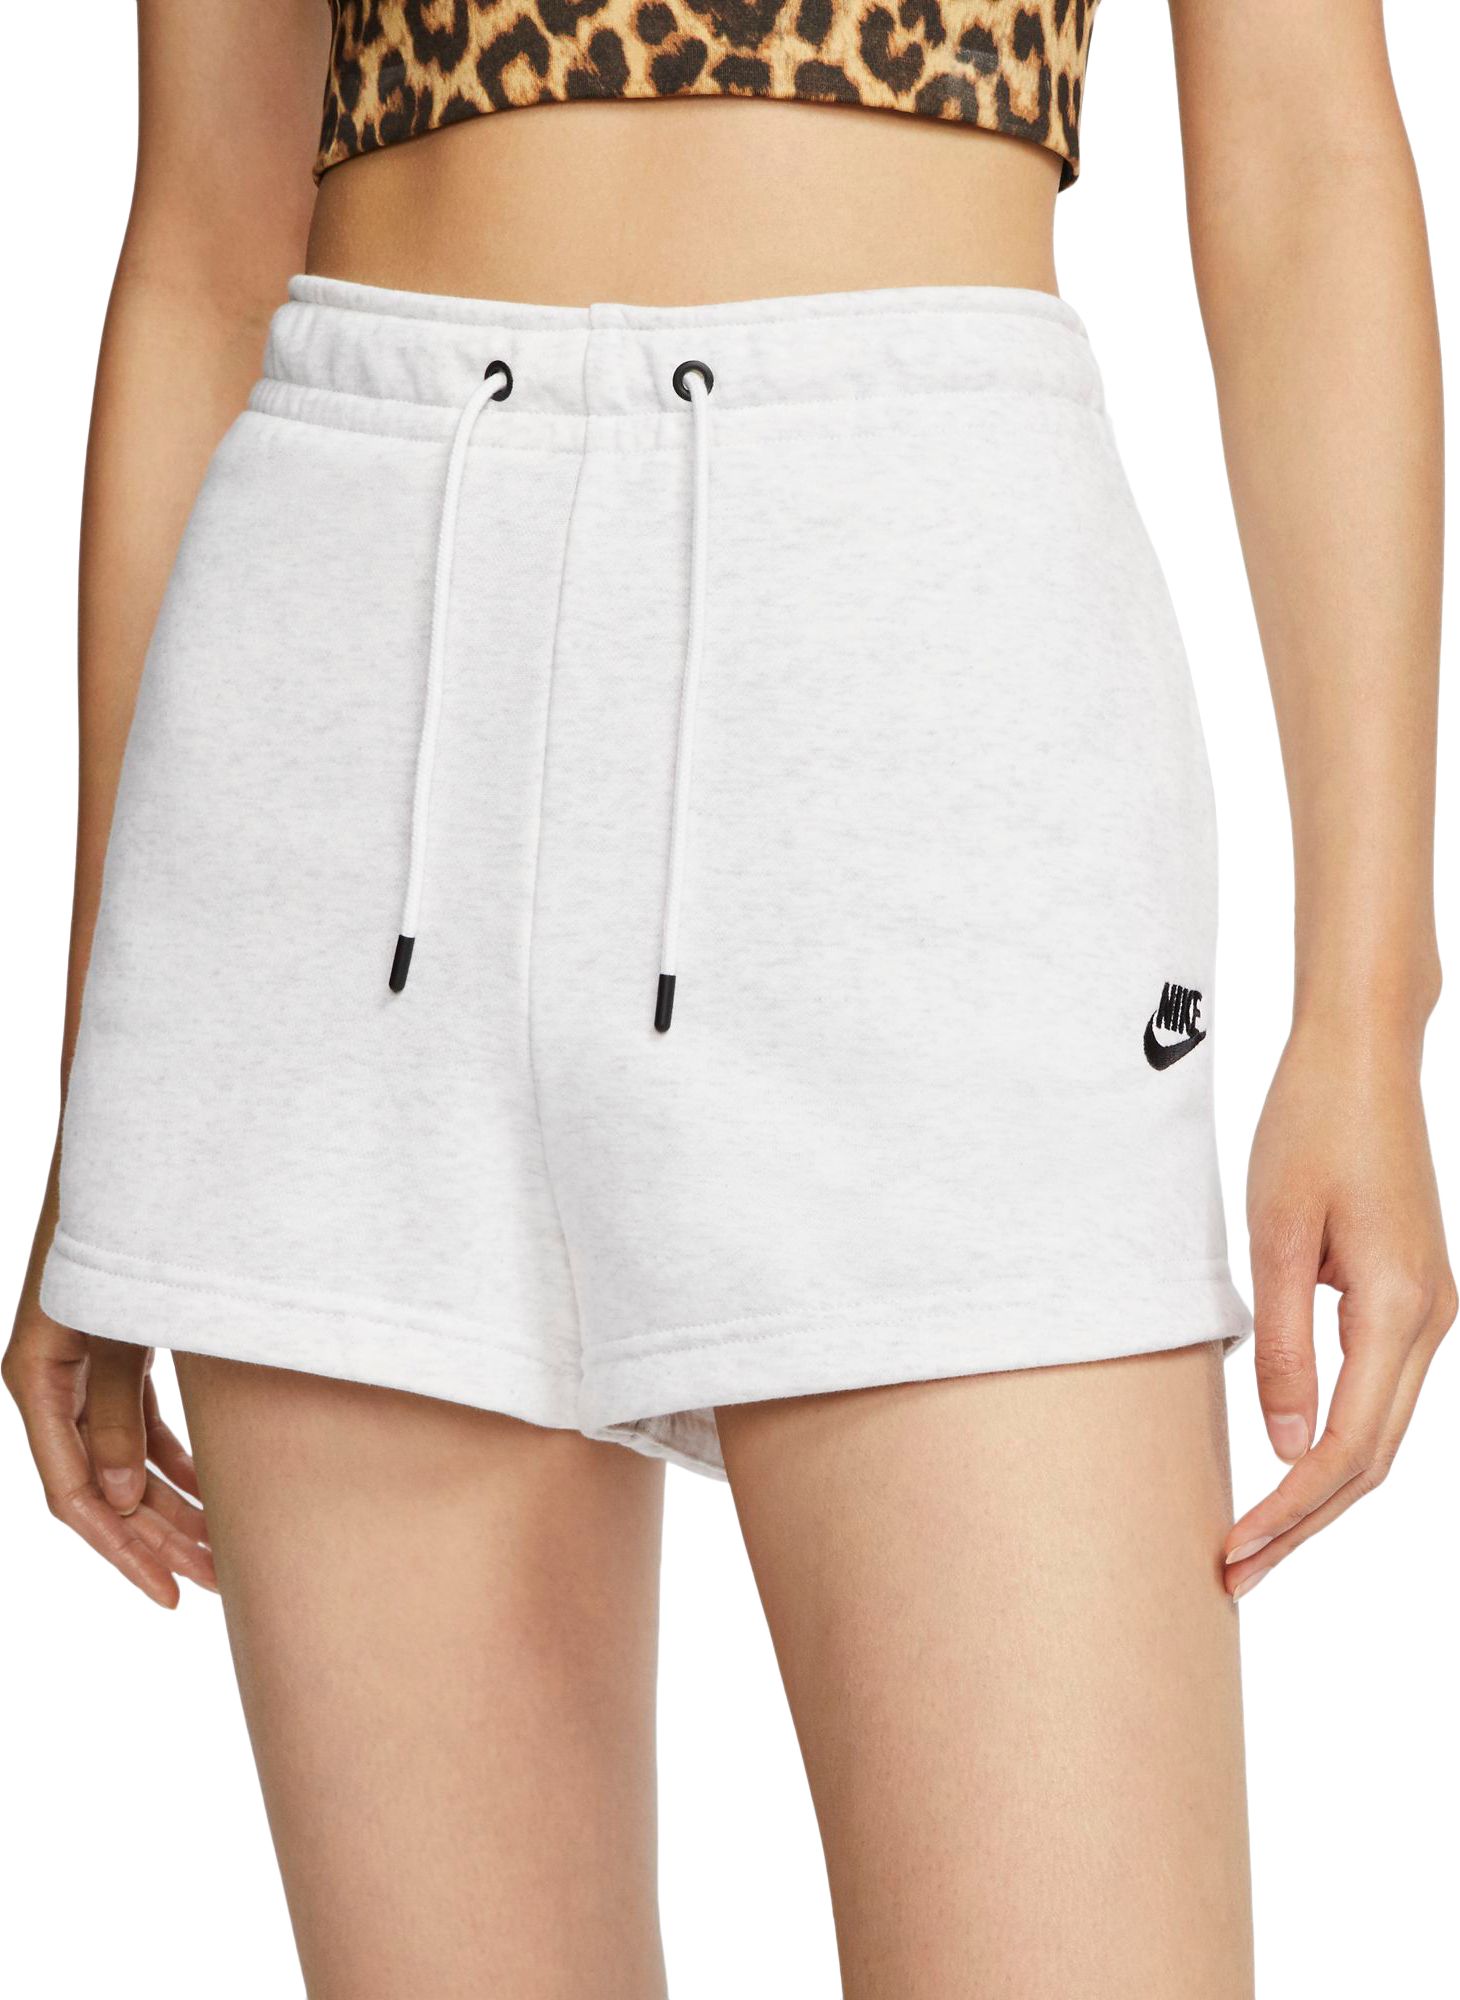 nike cloth shorts womens